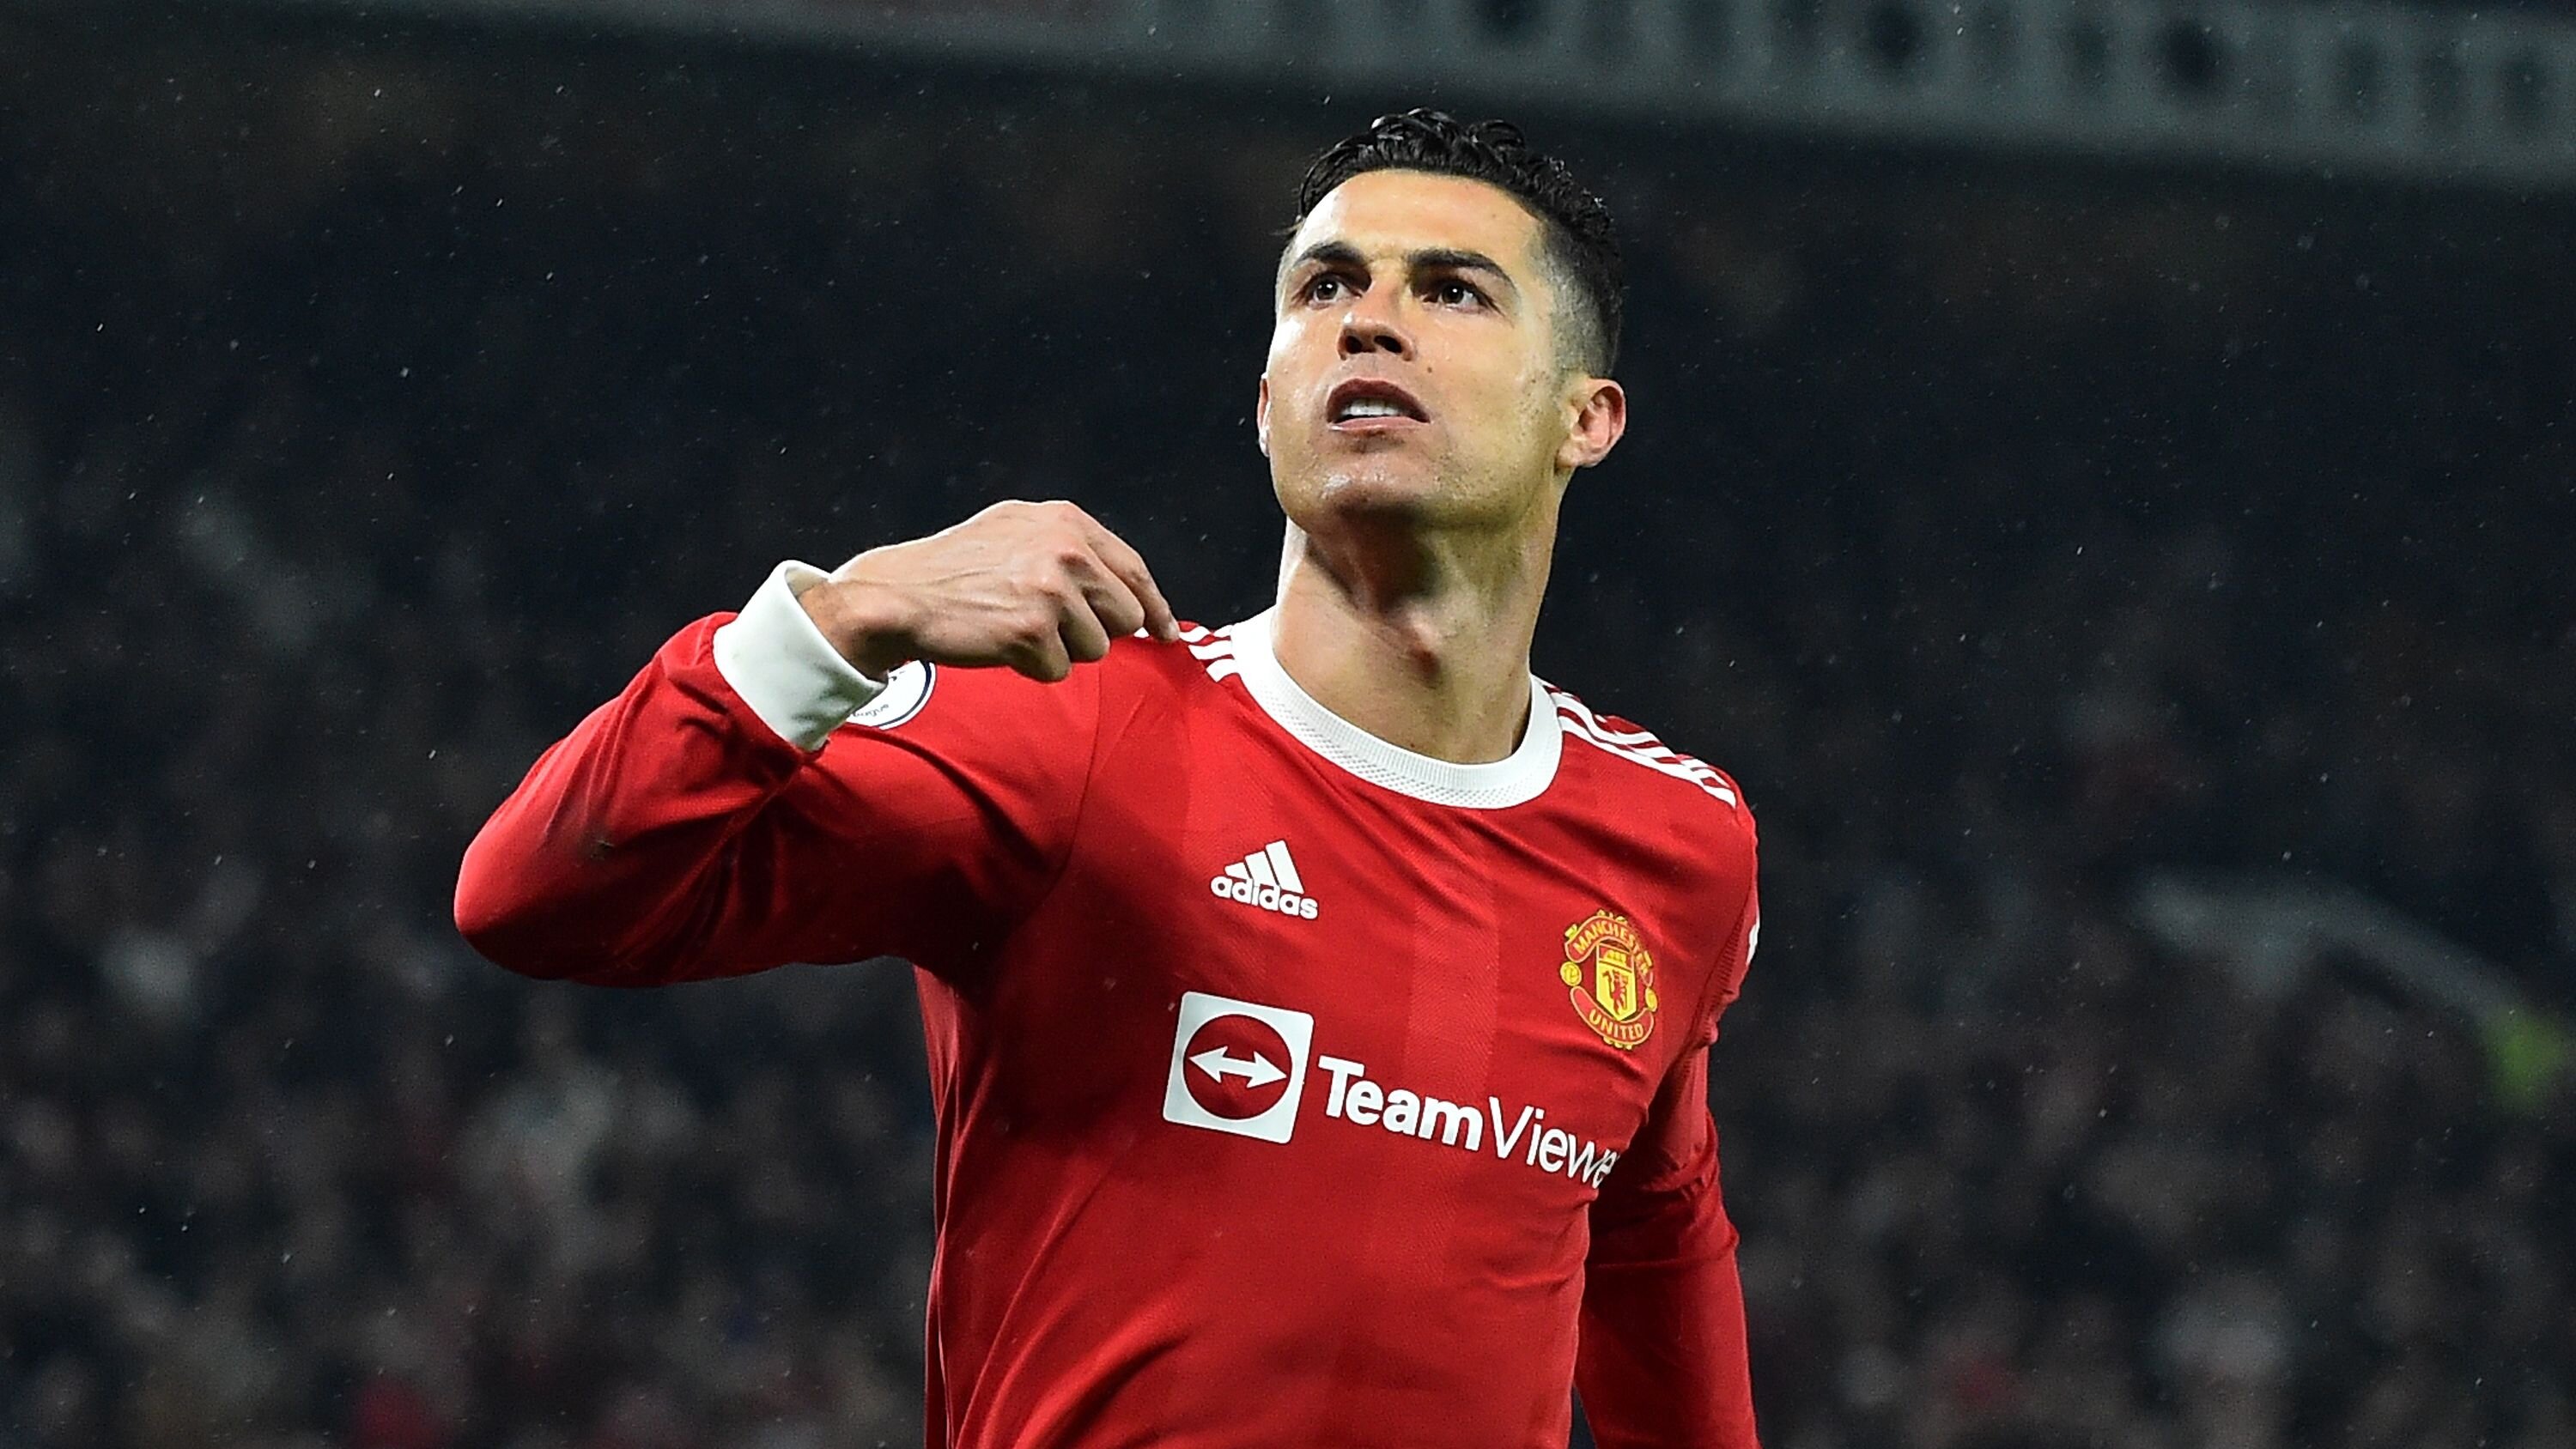 Cristiano Ronaldo wearing a red football uniform